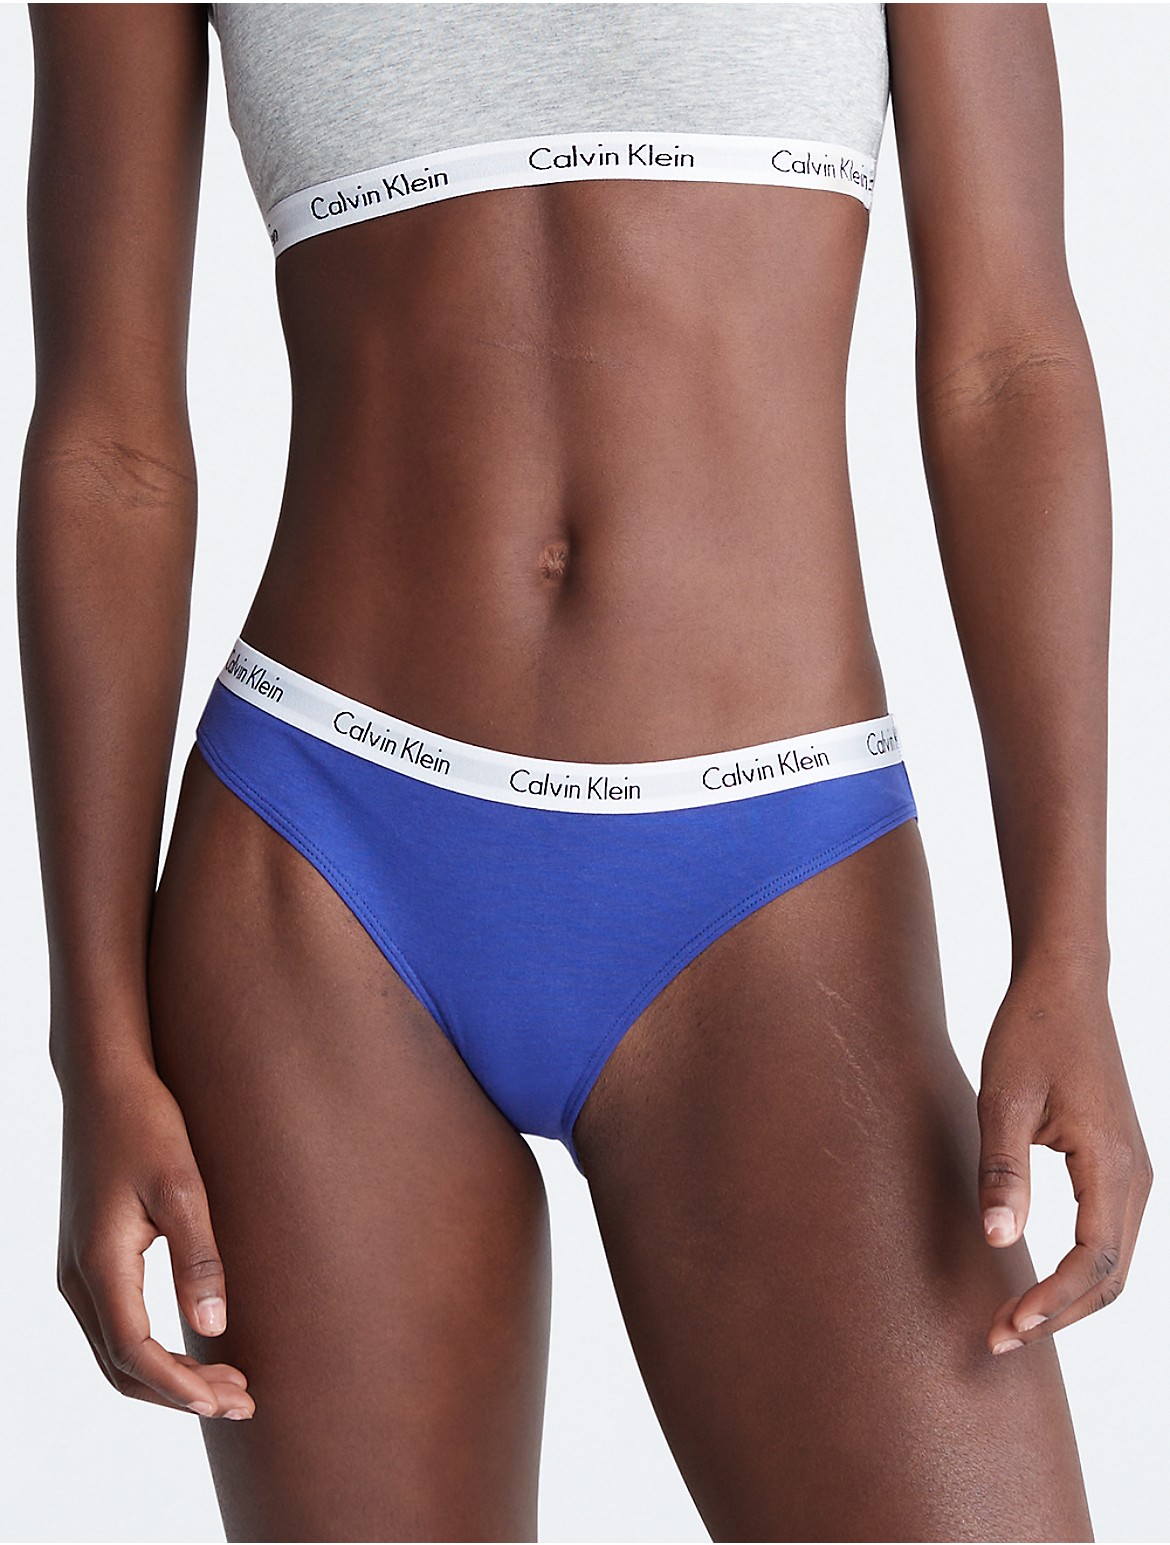 Calvin Klein Women's Carousel Logo Cotton Bikini - Blue - XS